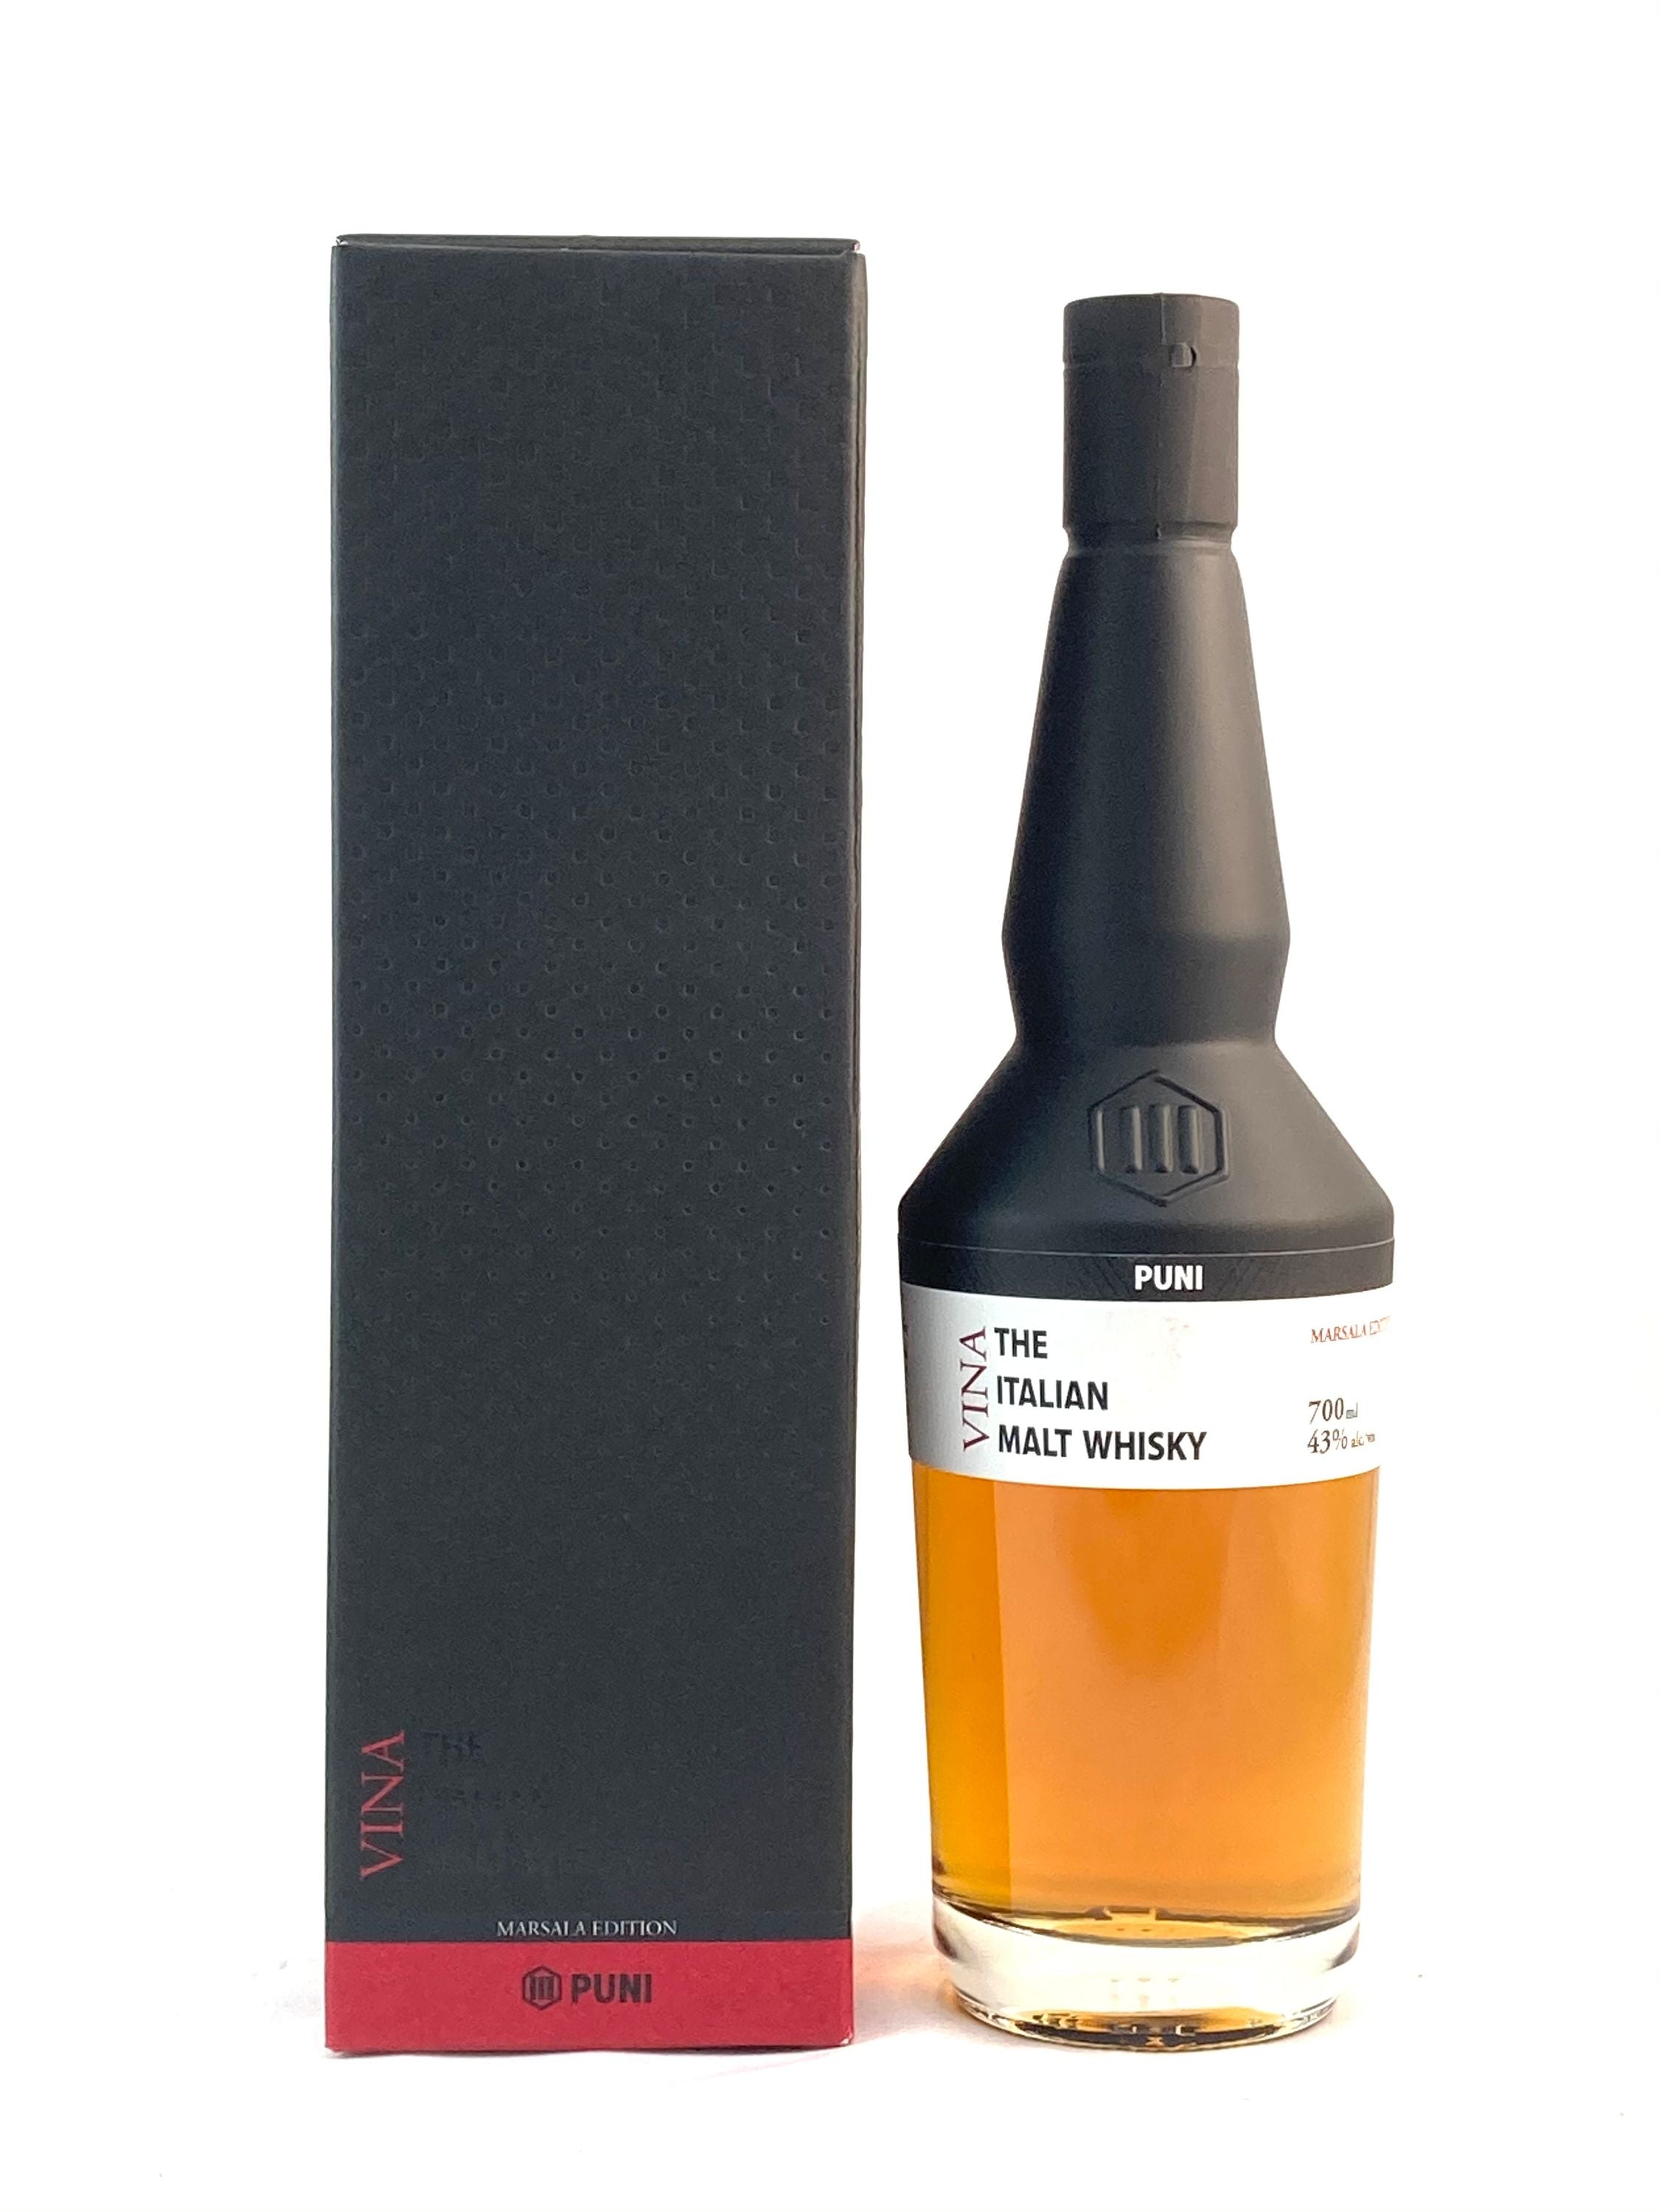 Puni Vina Marsala Edition Italian Malt Whisky, 0.7l, alc. 43% vol.